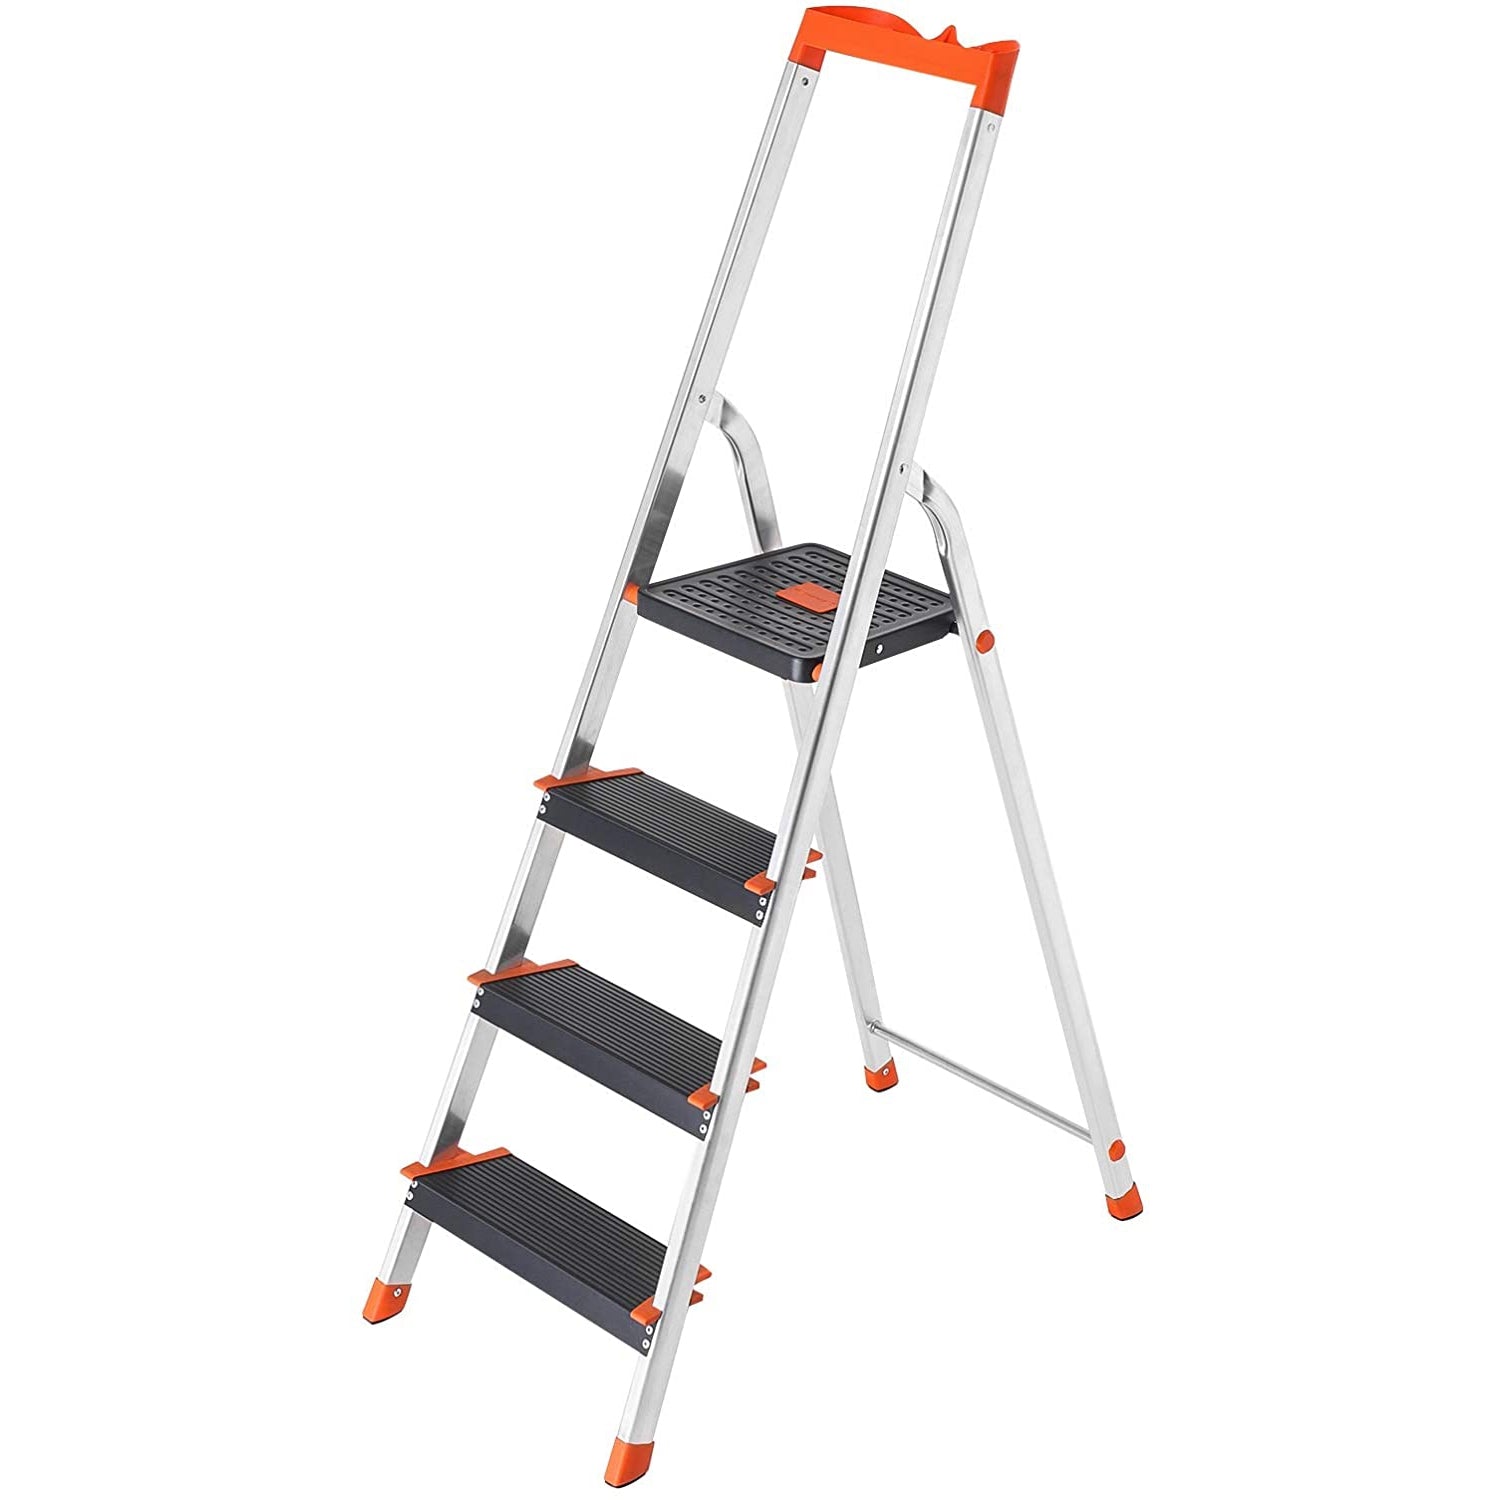 Nancy's Caintown Ladder - 4 Steps - Aluminum - Stepladder - Tool Tray - Anti-Slip - Black - Orange - 44 x 11.5 x 156 cm